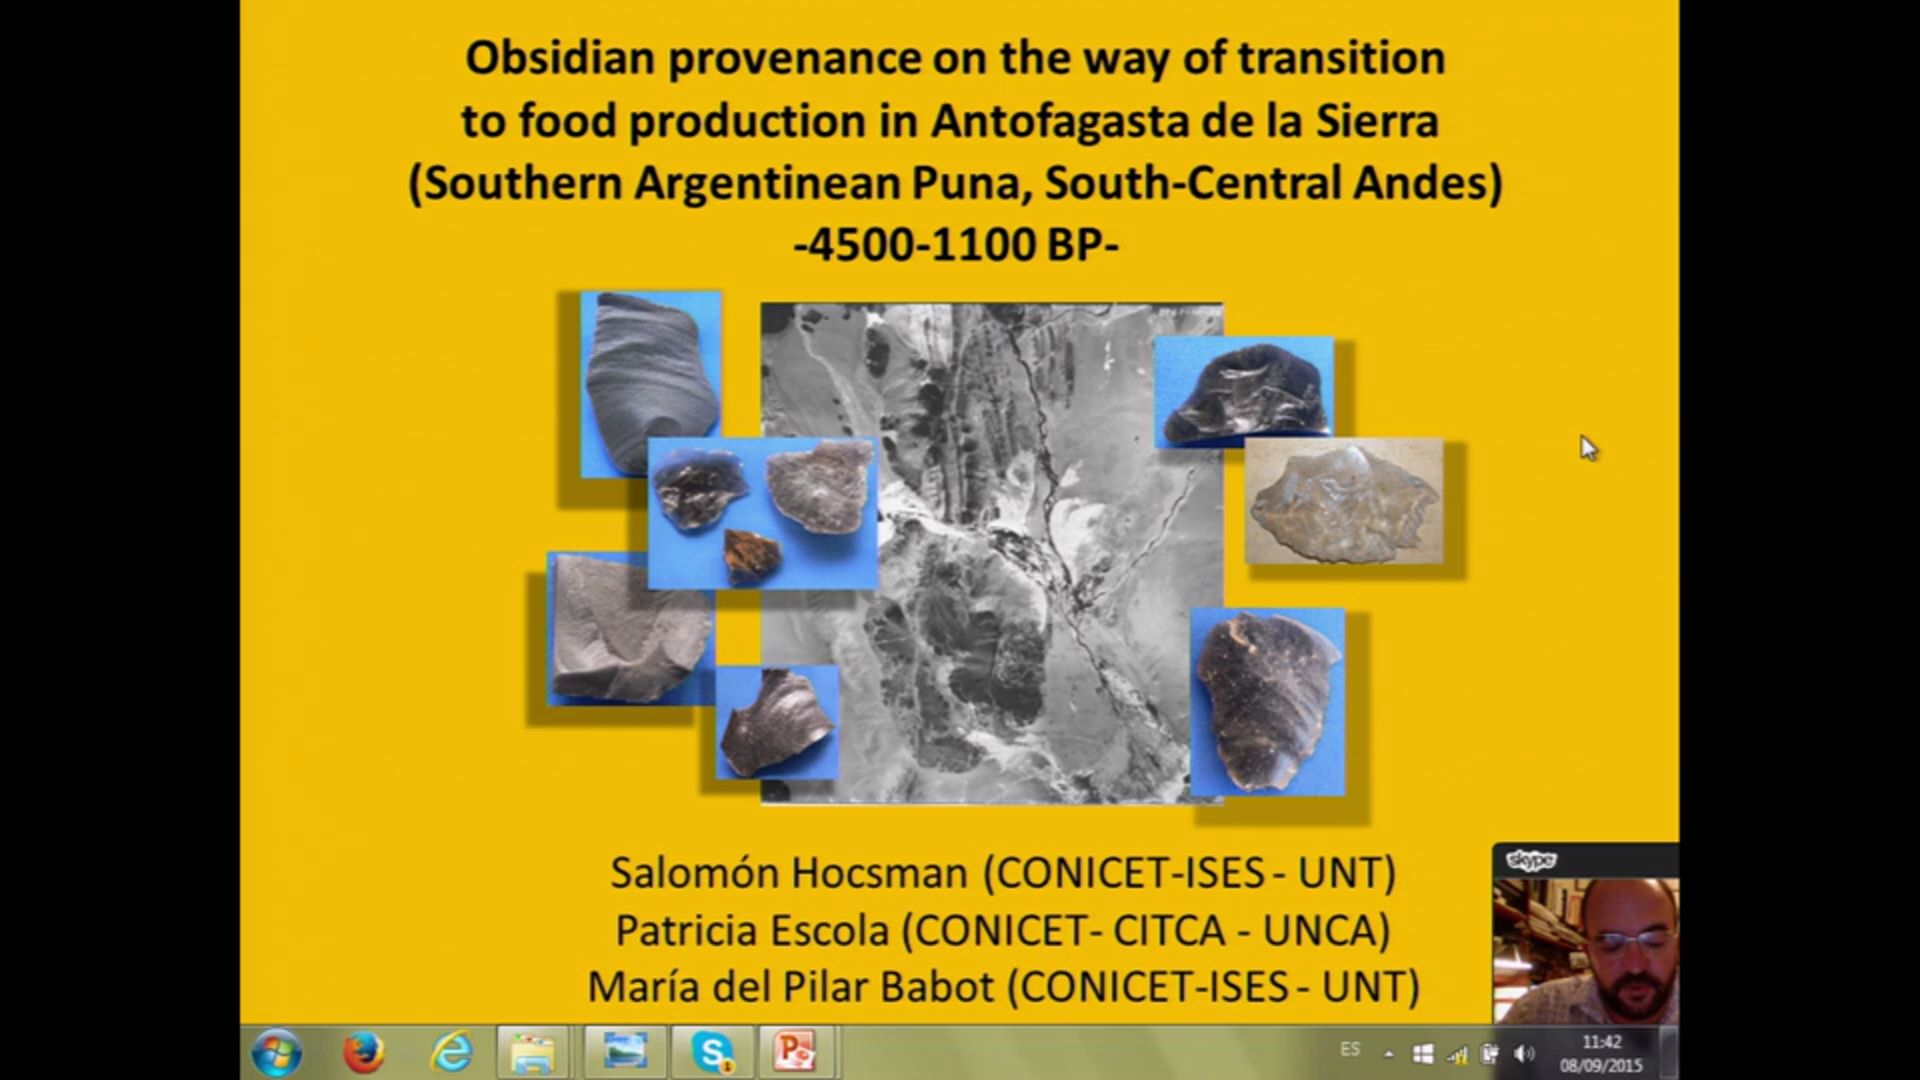 Obsidian provenance during the transition to food production in Antofagasta de la Sierra. Salomon Hocsman